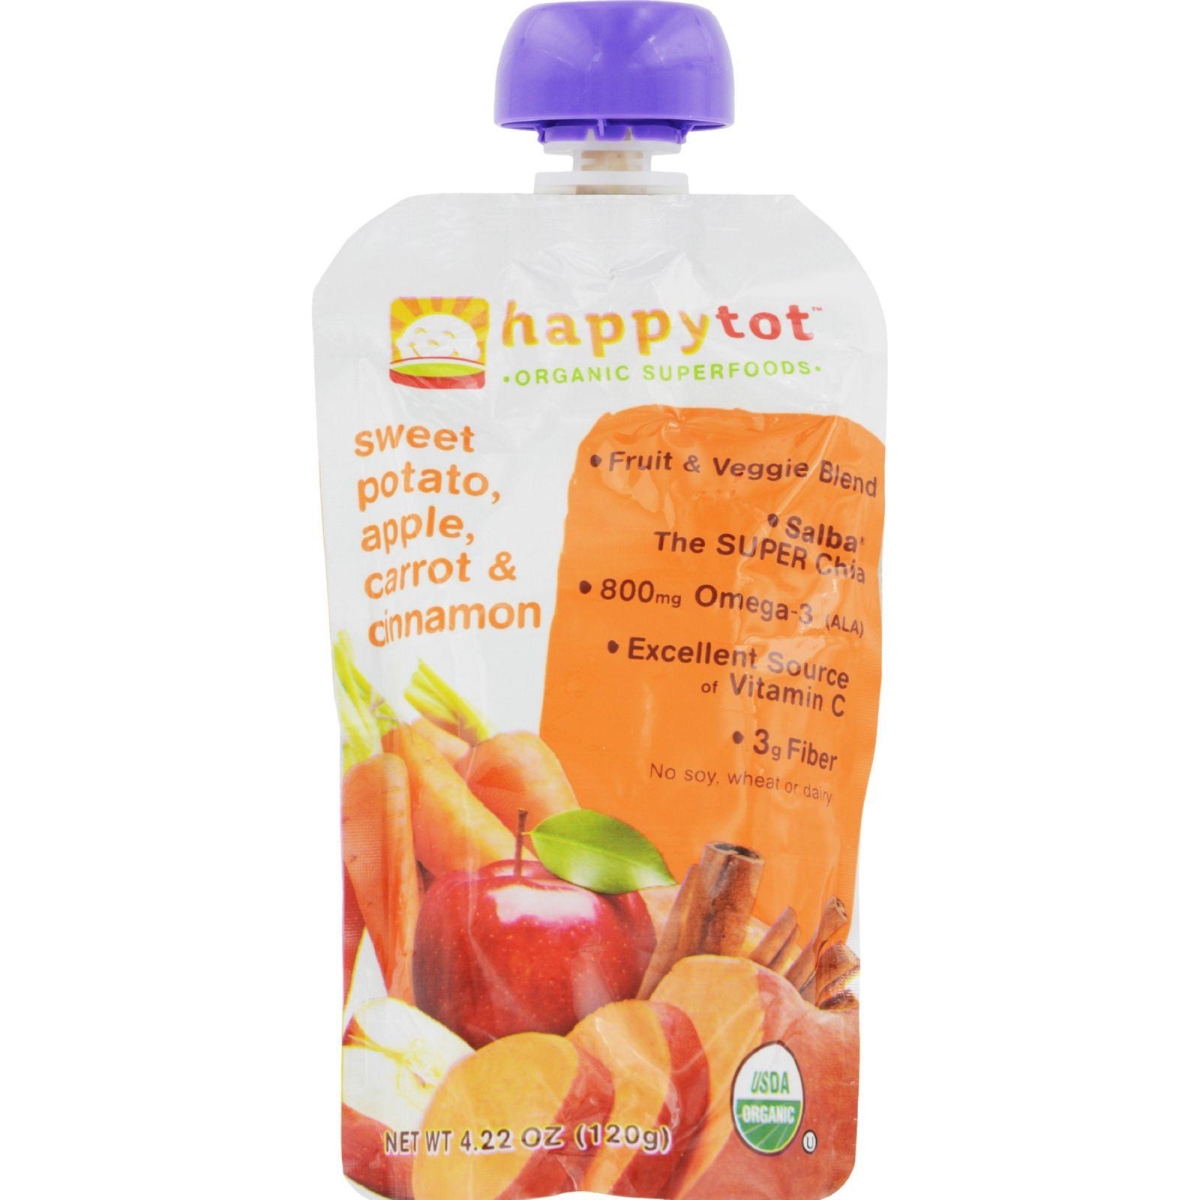 4.22 Oz Happytot Organic Superfoods Sweet Potato Apple Carrot & Cinnamon, Case Of 16